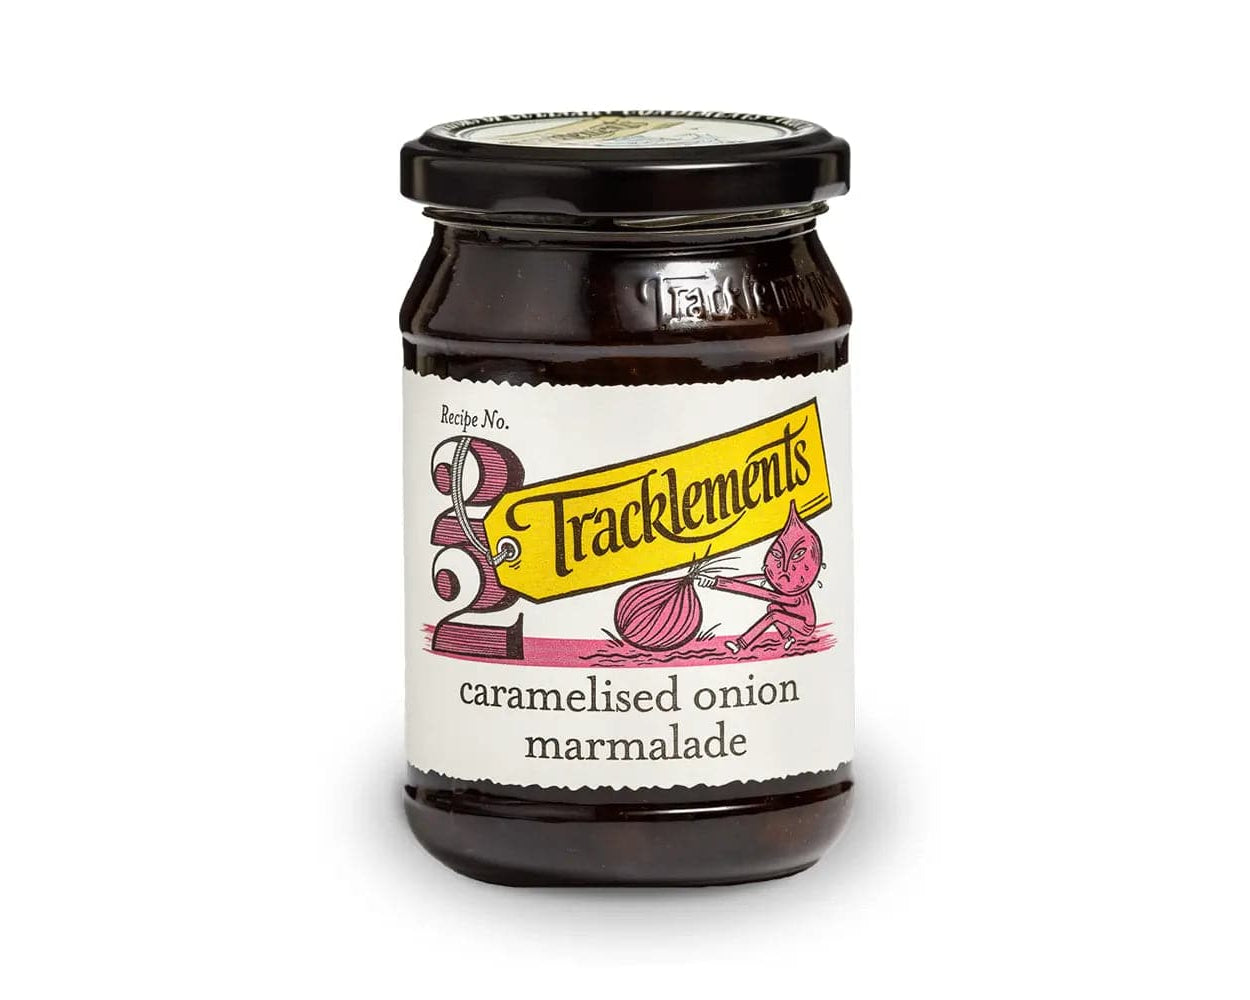 Tracklements Caramelised Onion Marmalade 345g - IMP & MAKER